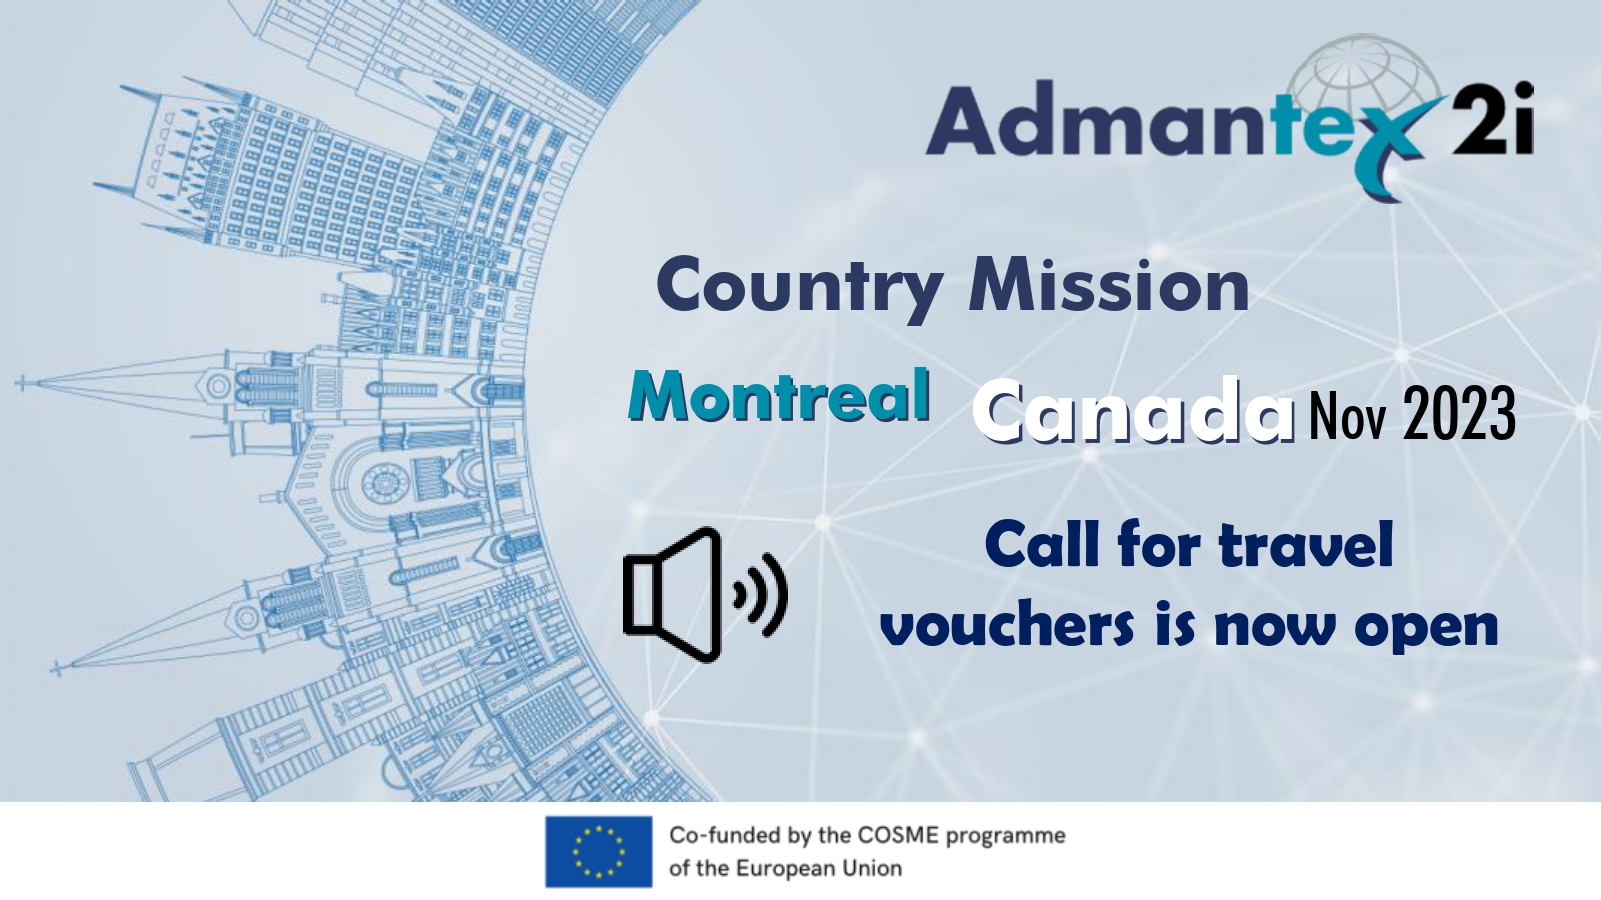 ADMANTEX2i-Canada-mission-banner-news